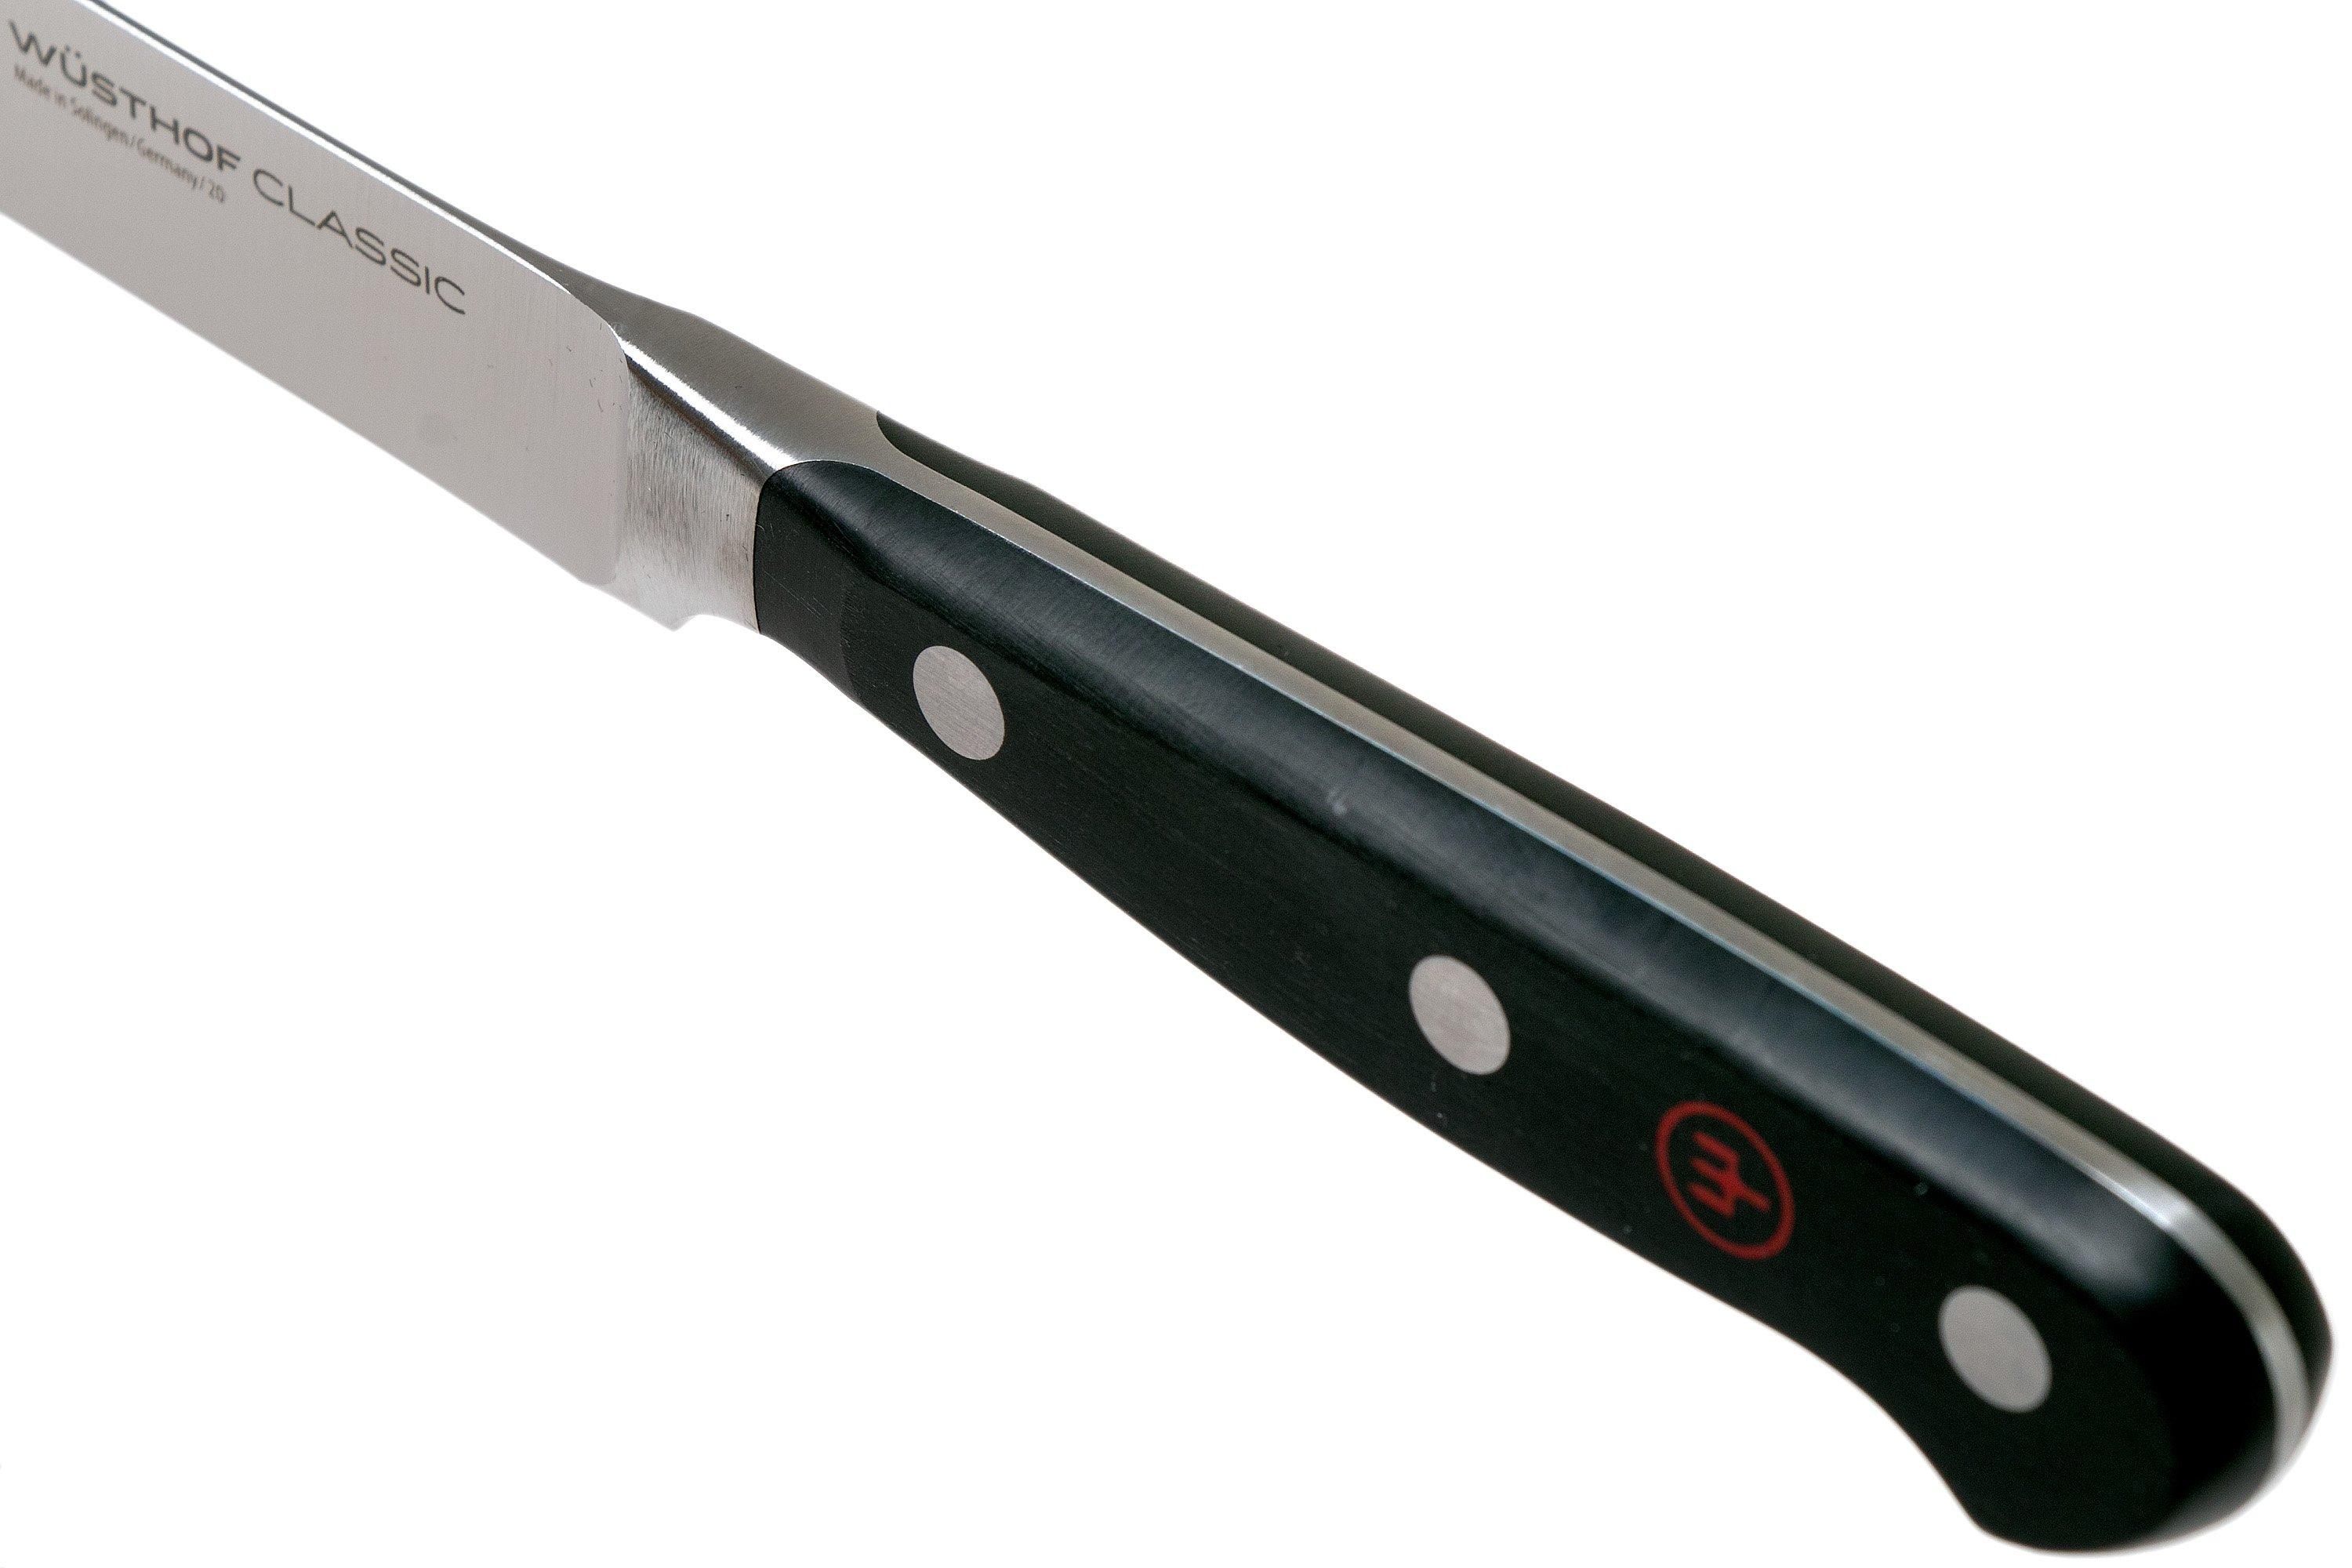 Wüsthof Classic fish filleting knife 20 cm, 1040102920